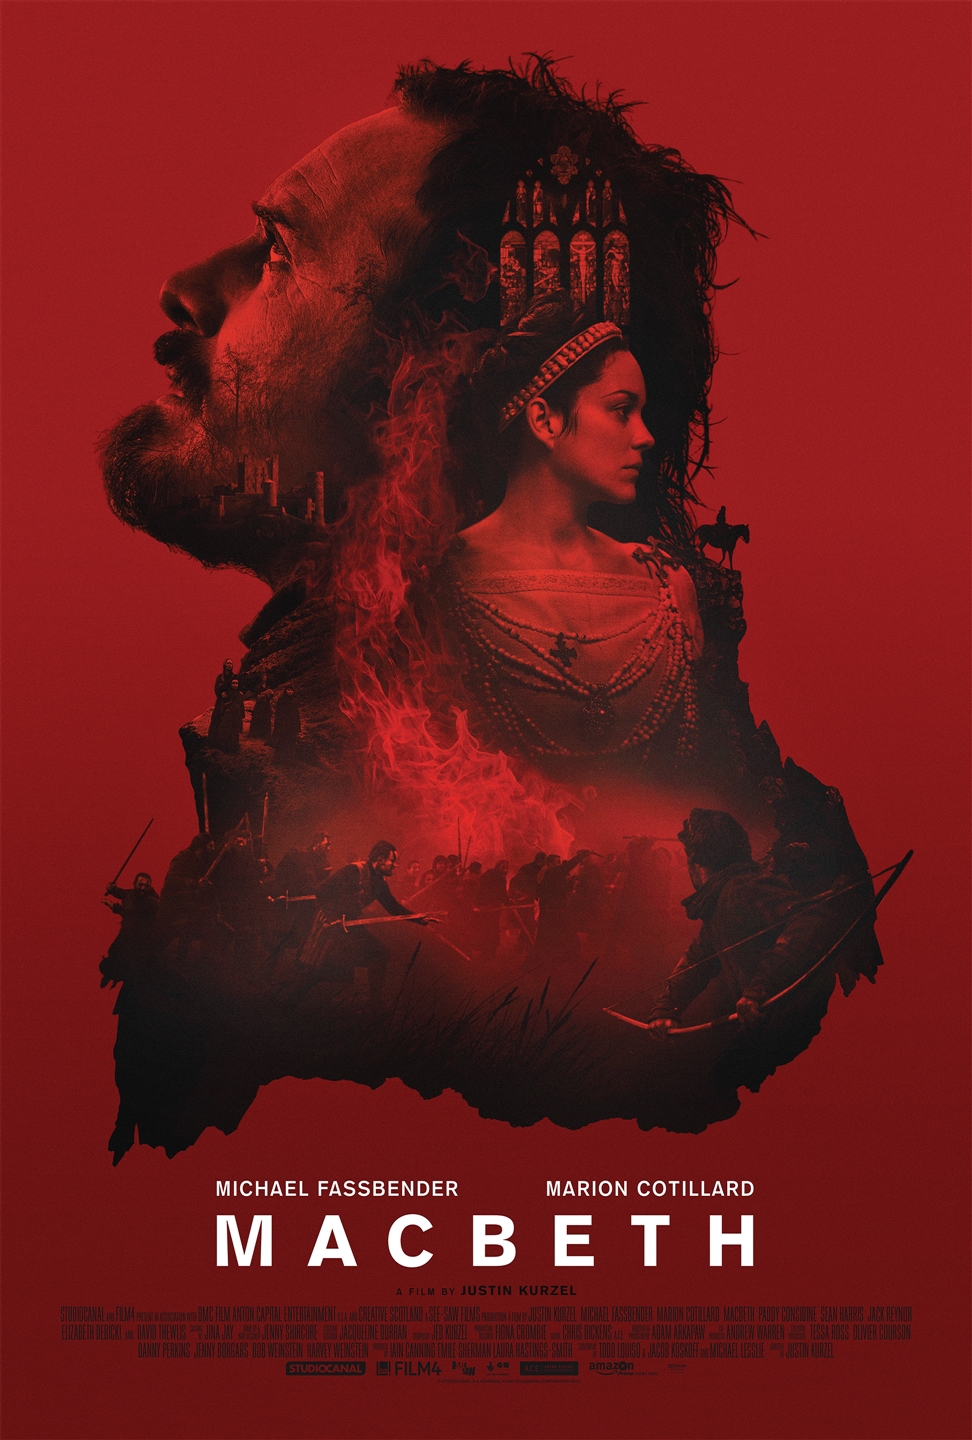 Marion Cotillard and Michael Fassbender in Macbeth (2015)